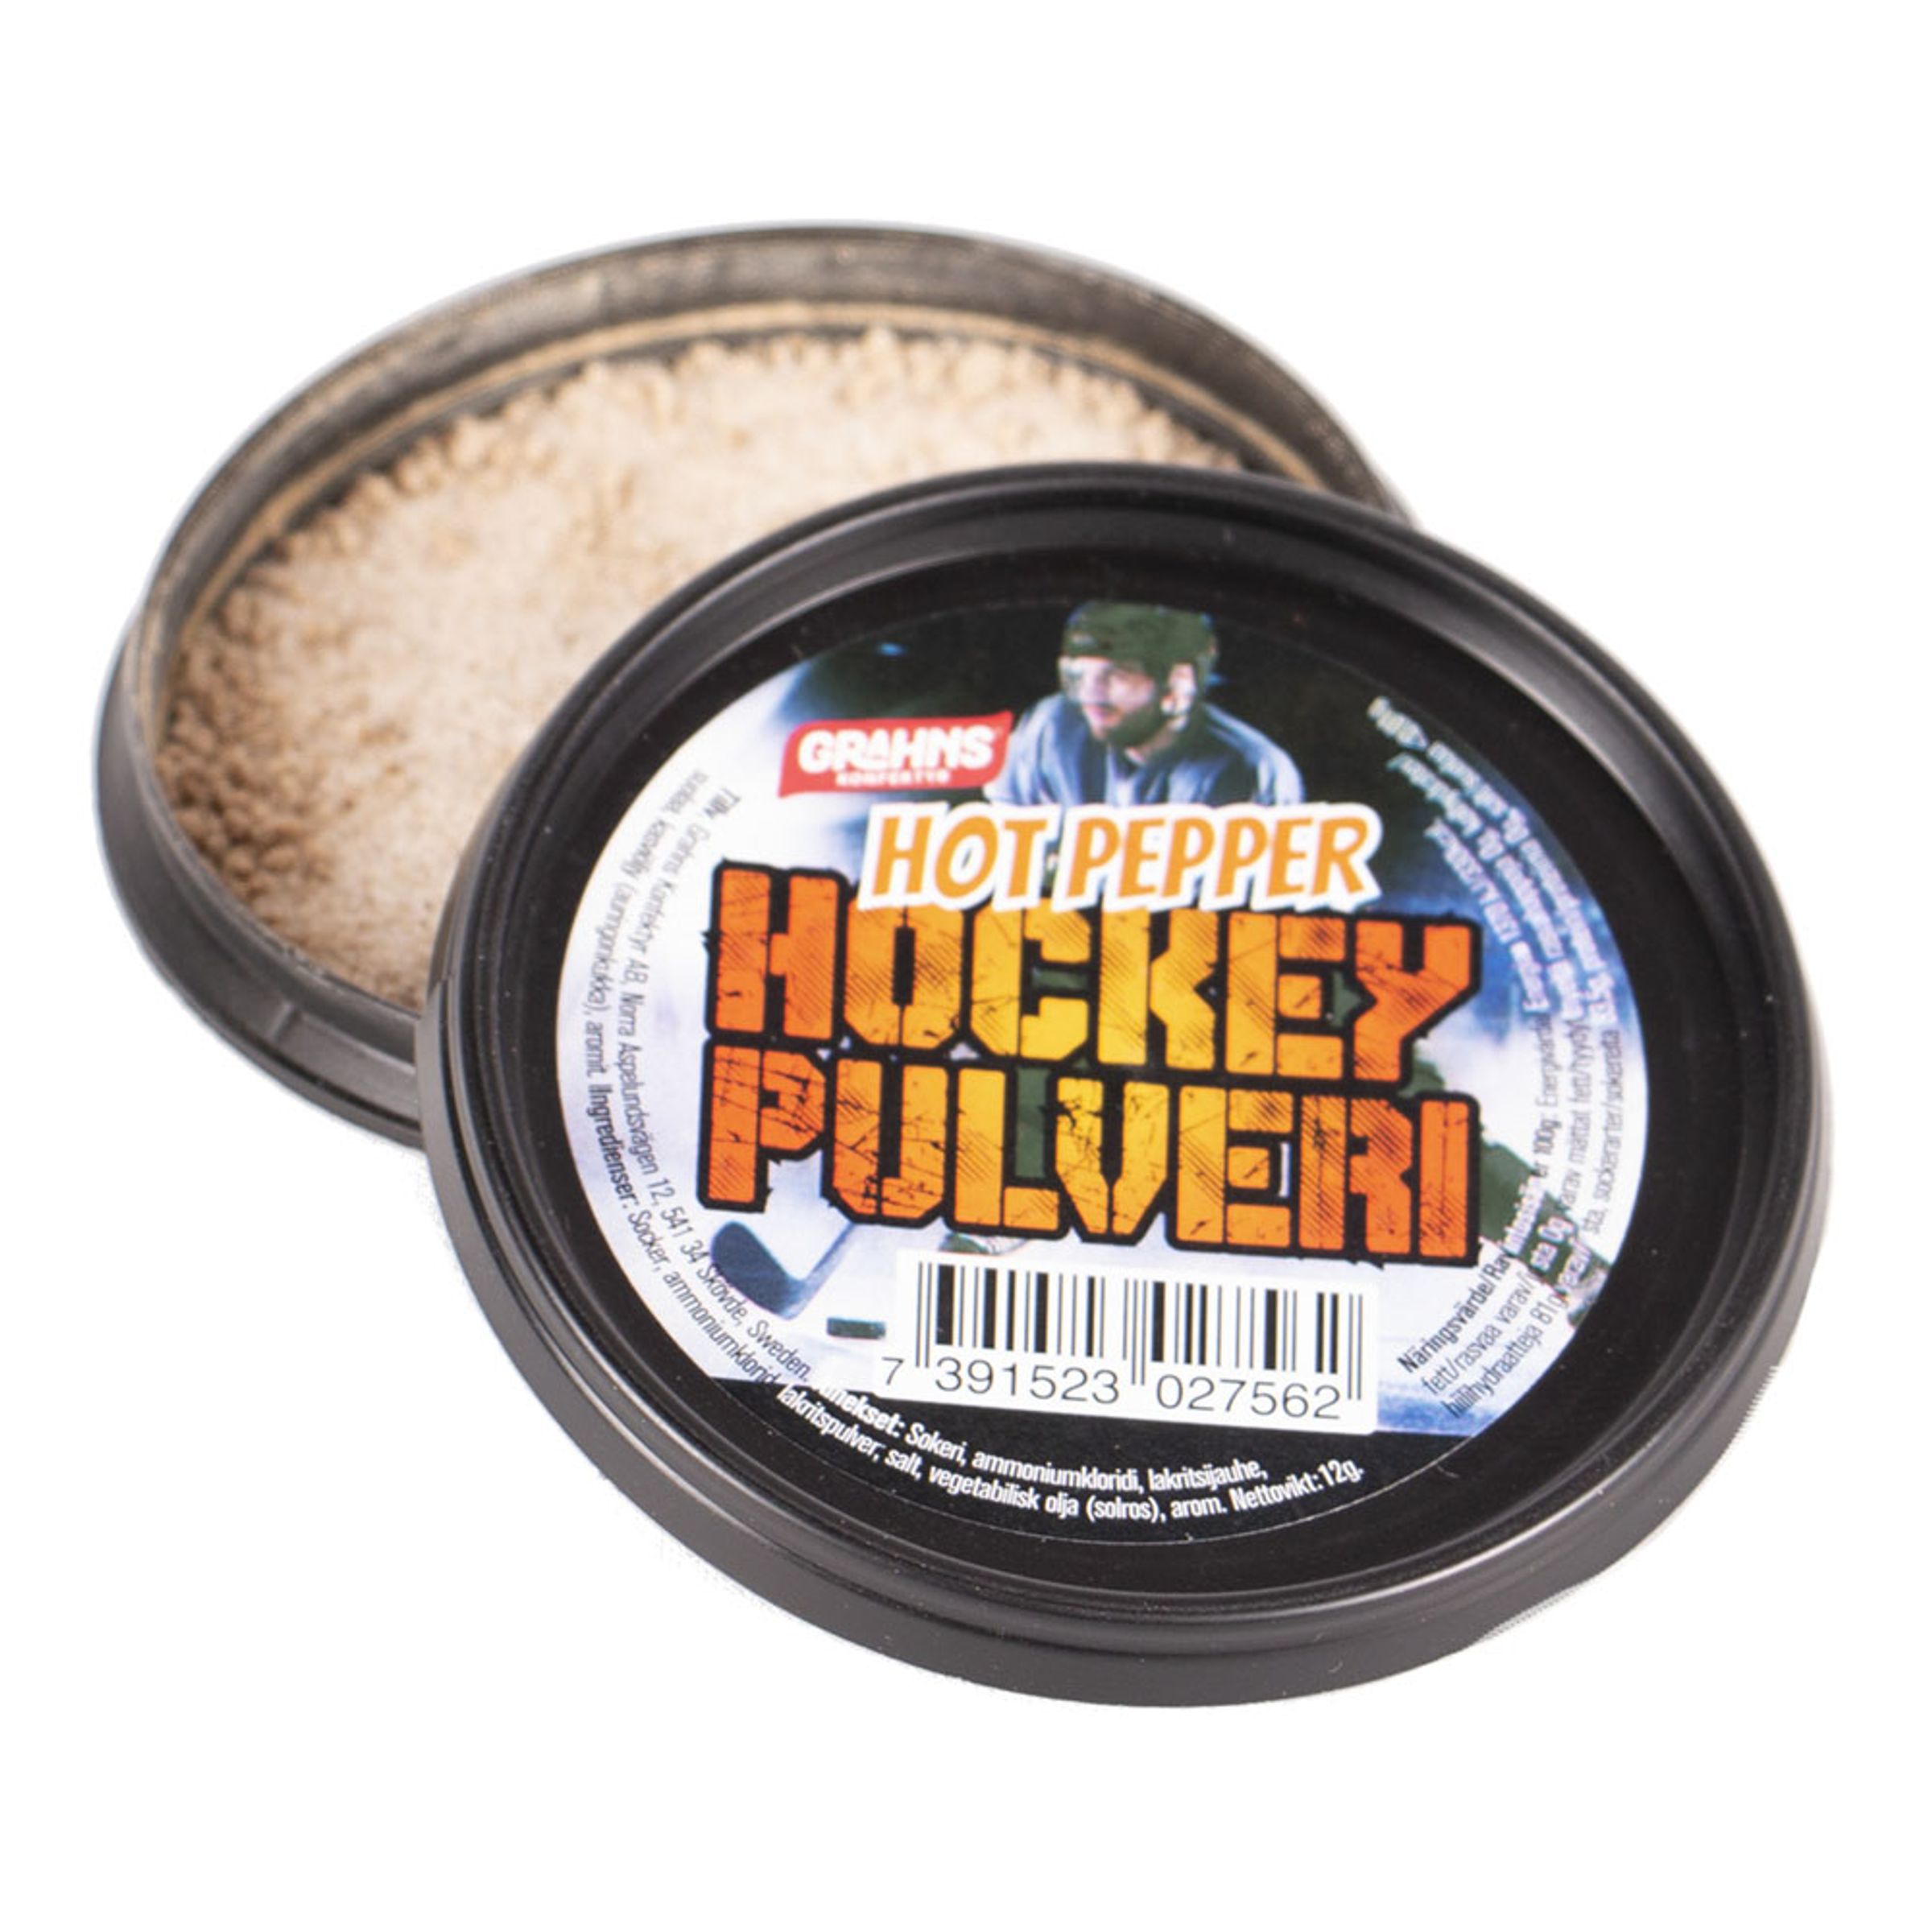 Hockeypulver Hot Pepper - 1-pack